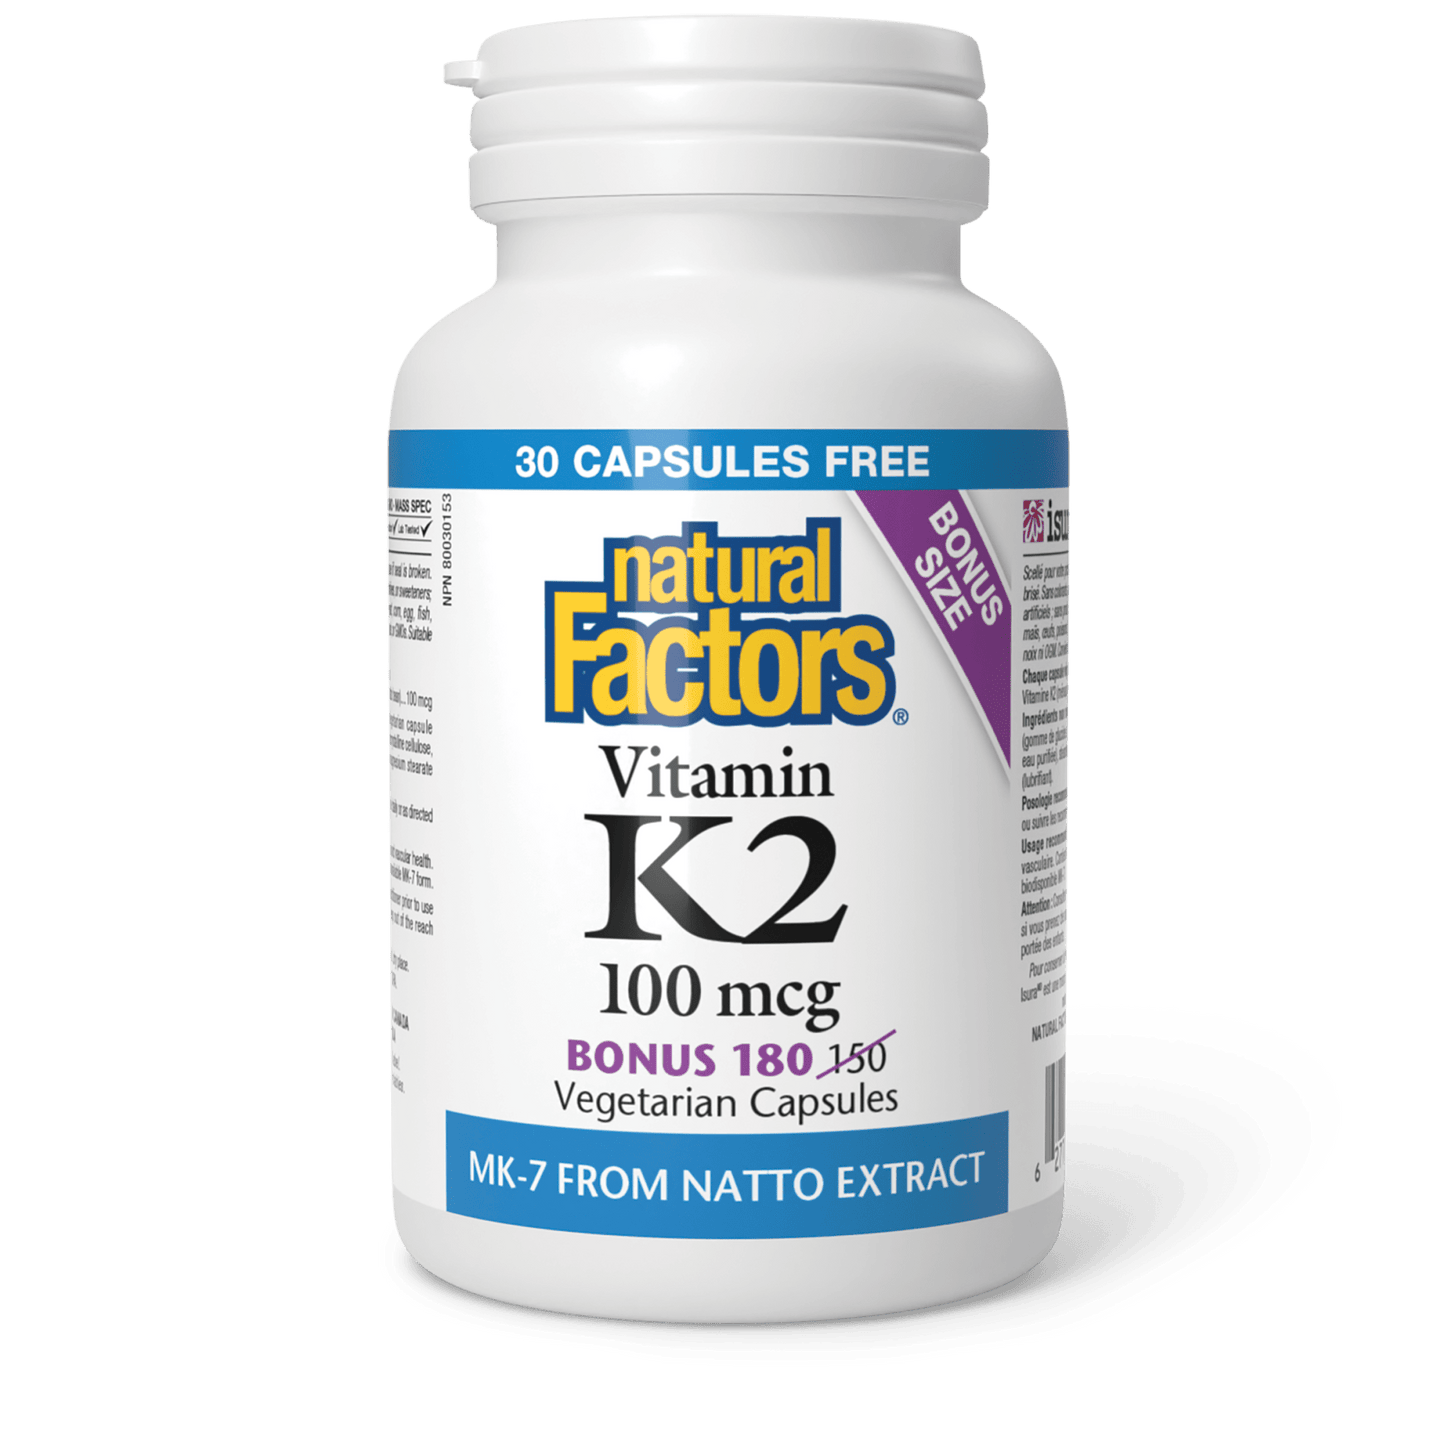 Vitamin K2 100 mcg, Natural Factors|v|image|8001